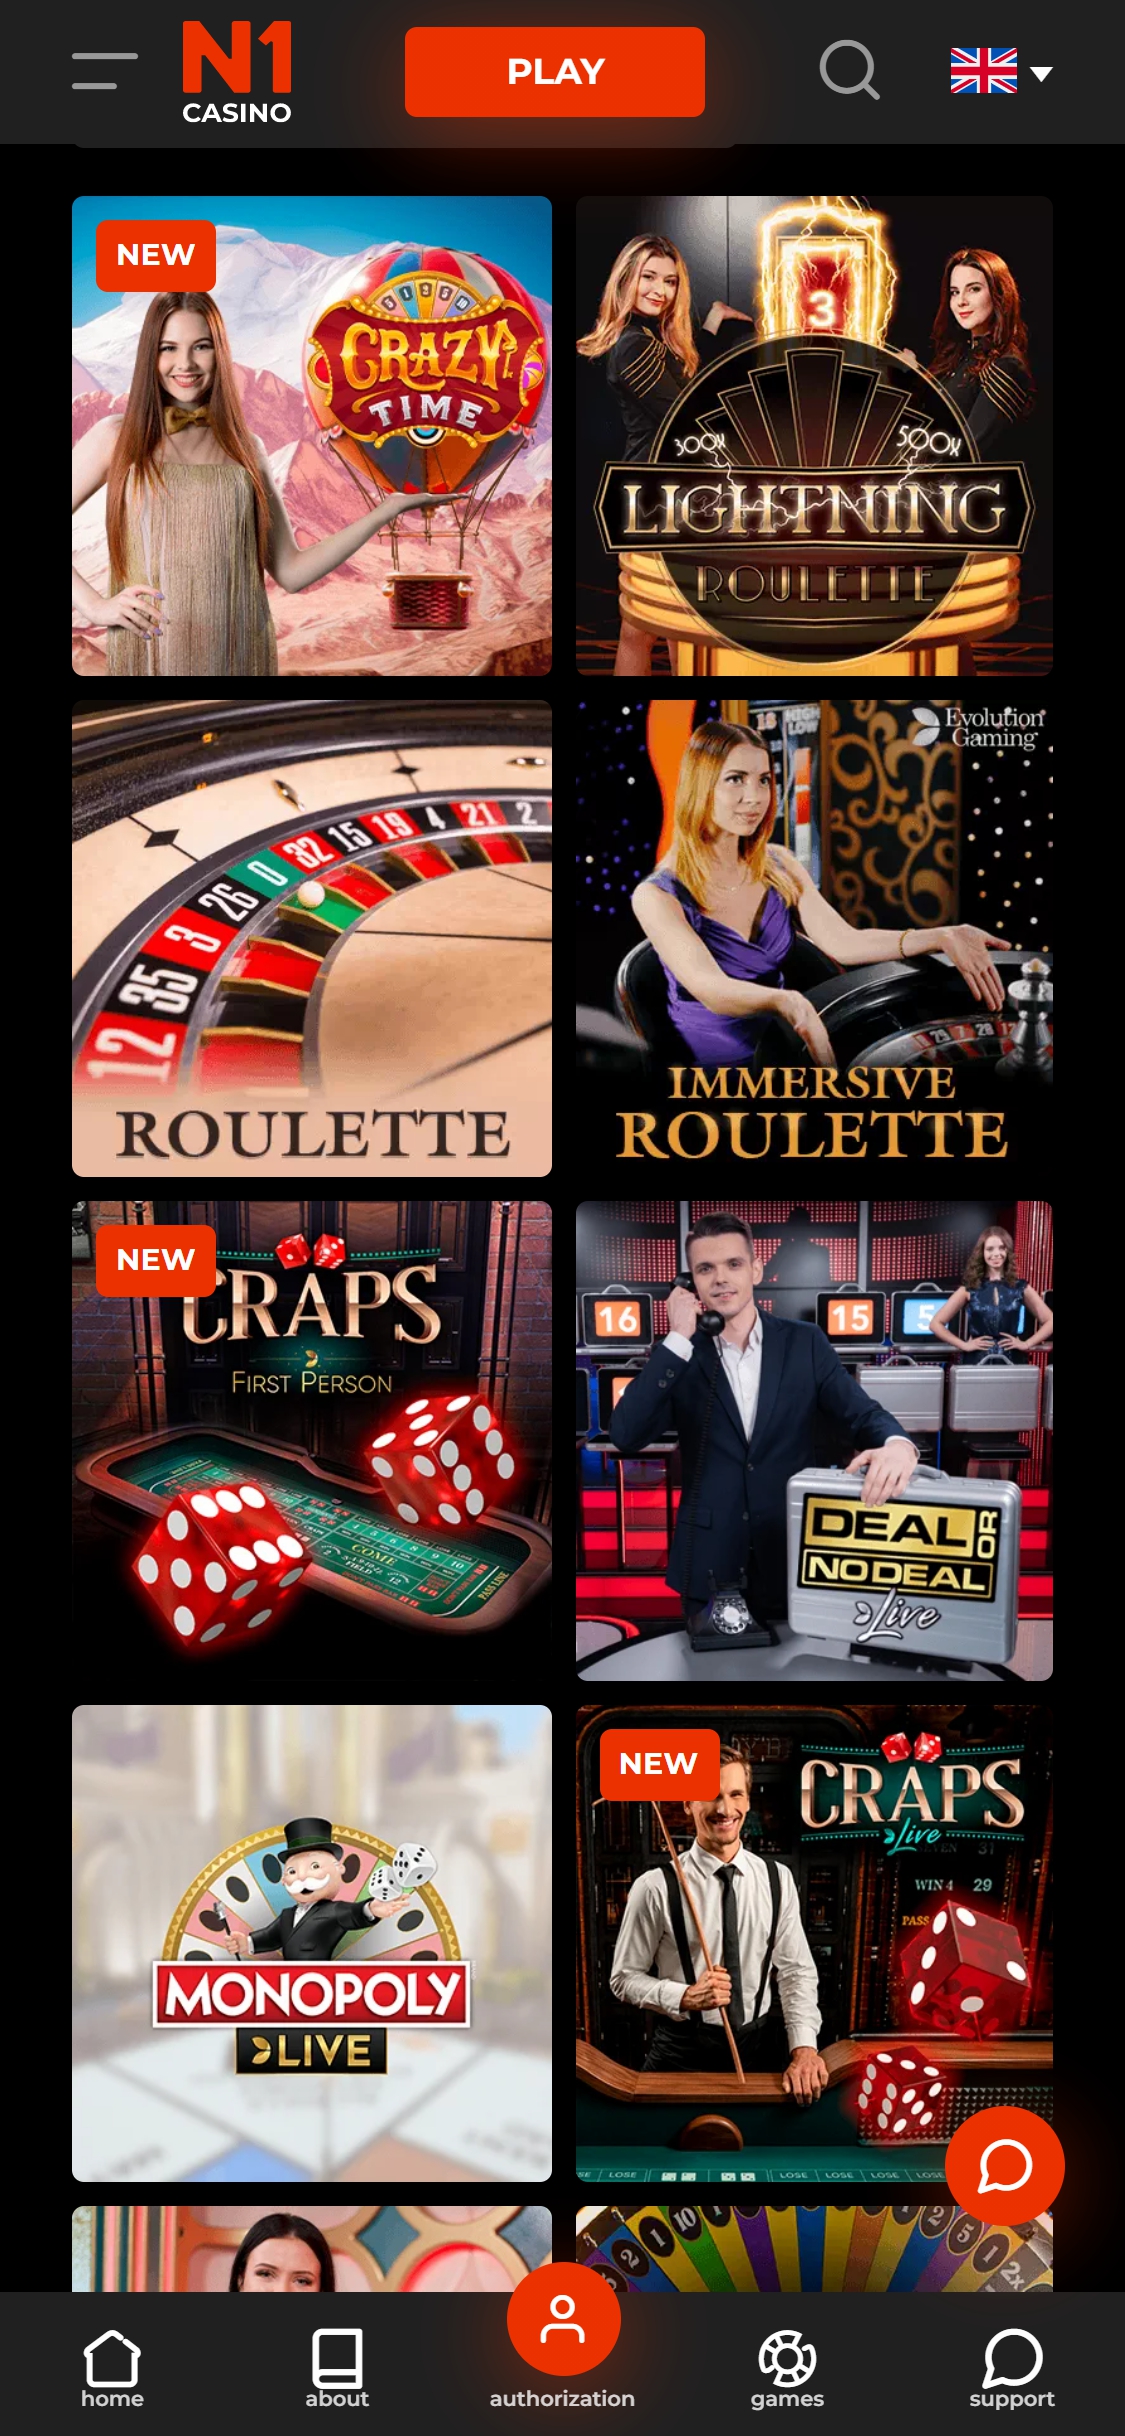 N1 Casino Mobile Live Dealer Games Review